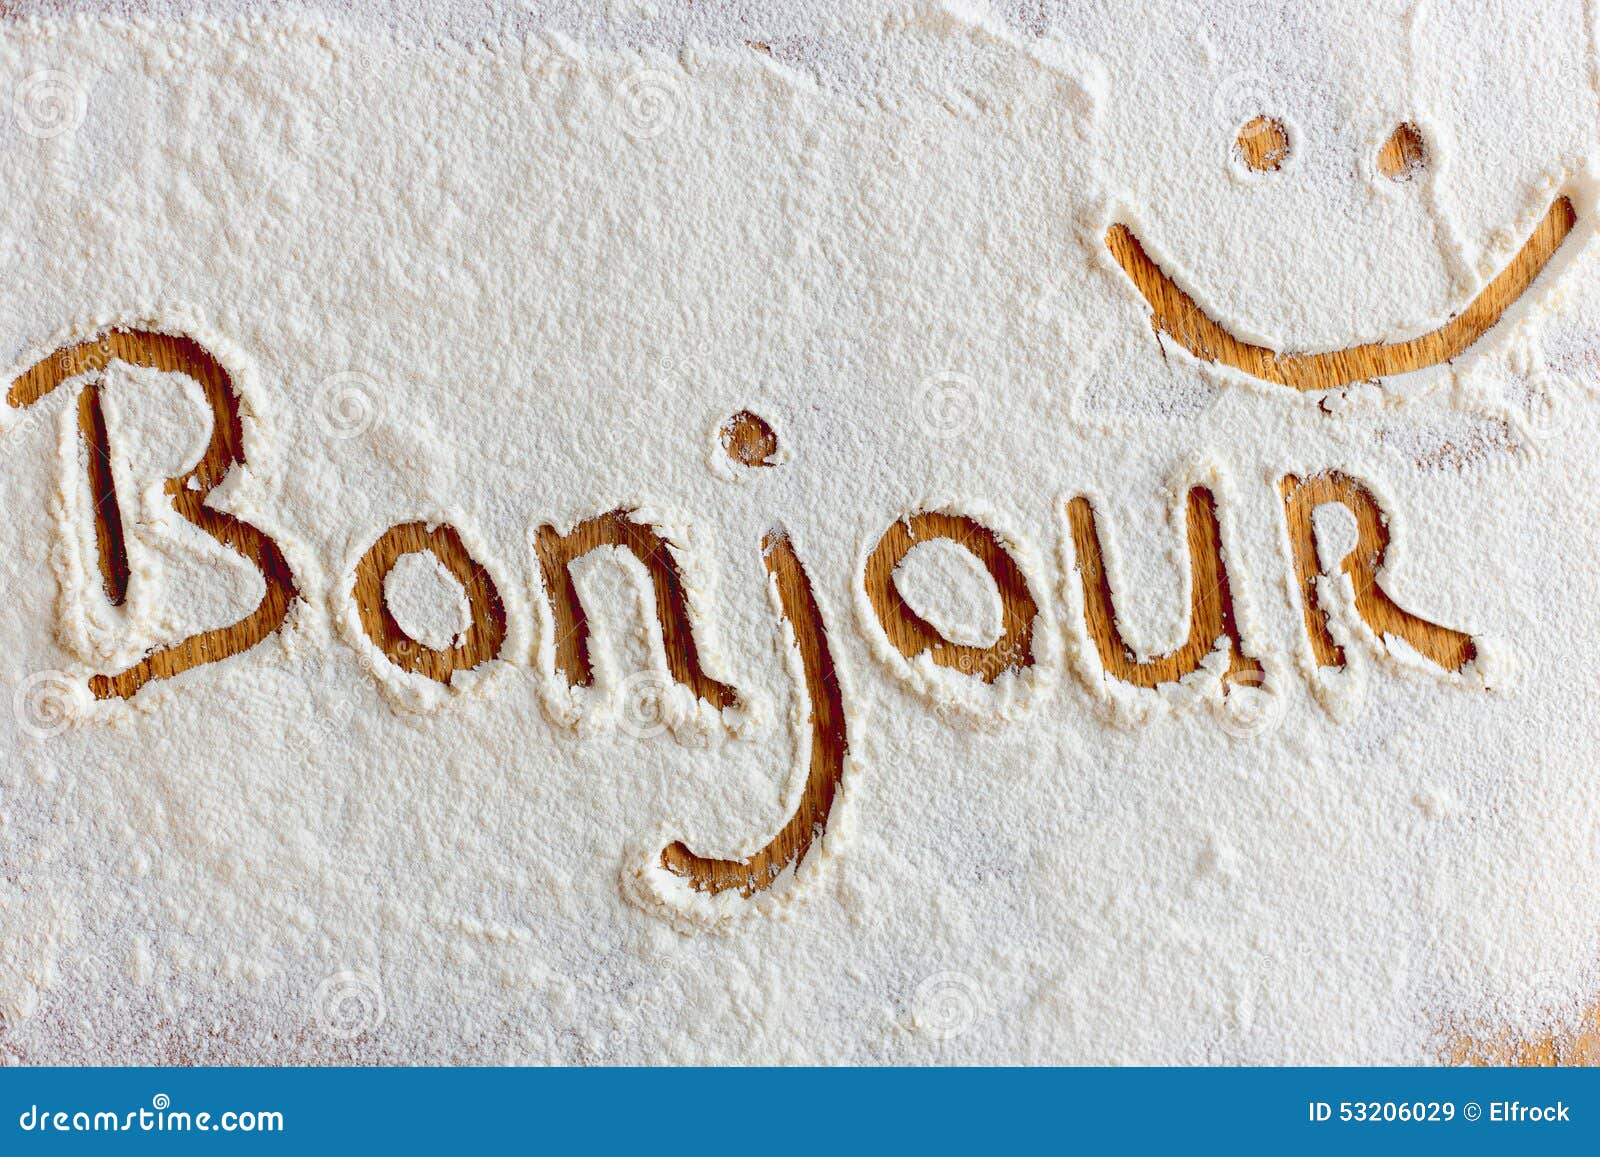 Утро года 5 букв. Bonjour картинки. Бонжур слово. Bonjour надпись. Фото со словами Бонжур.